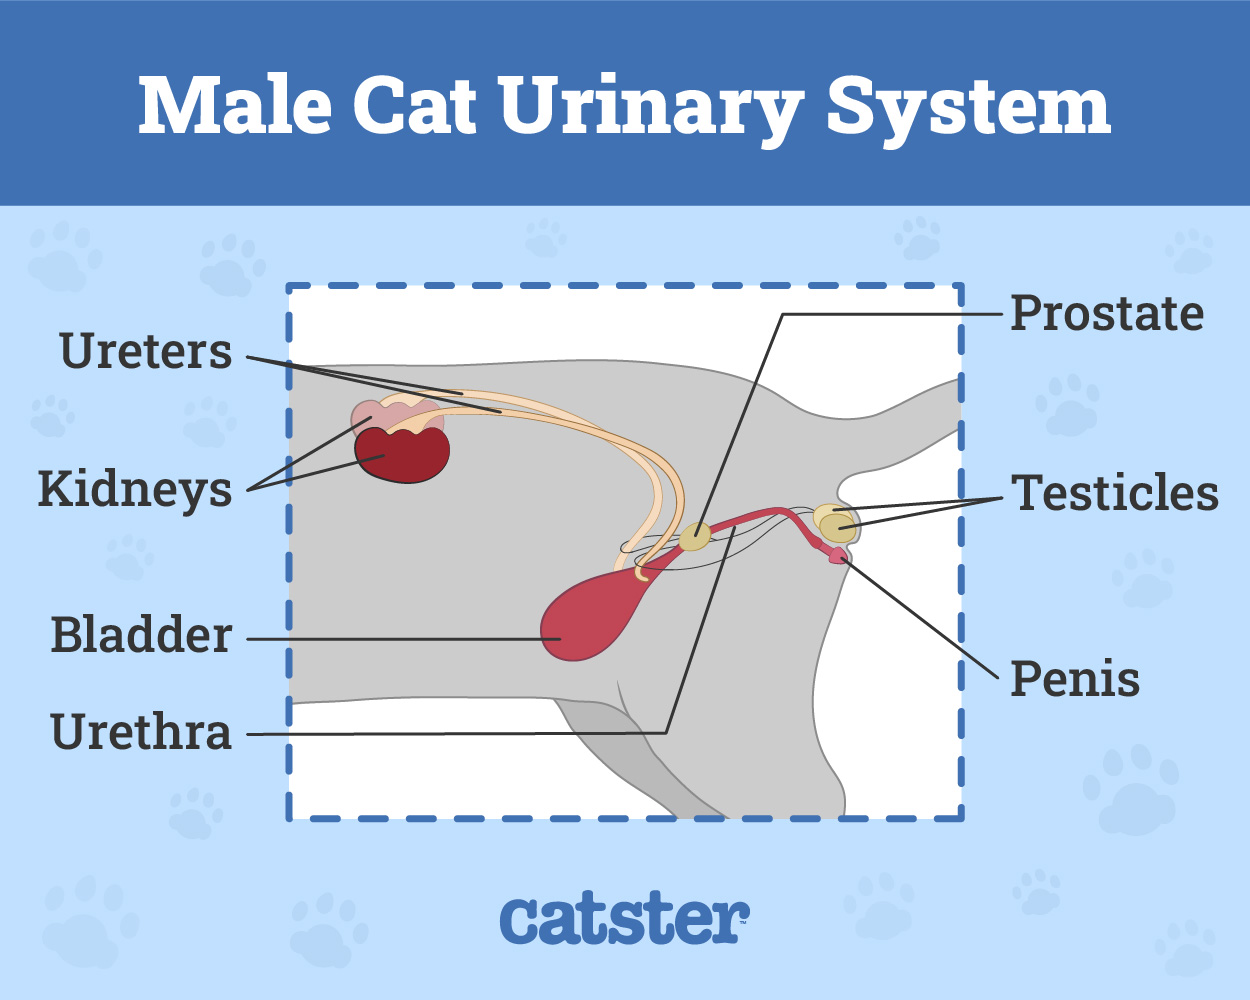 Male Cat Urirary System